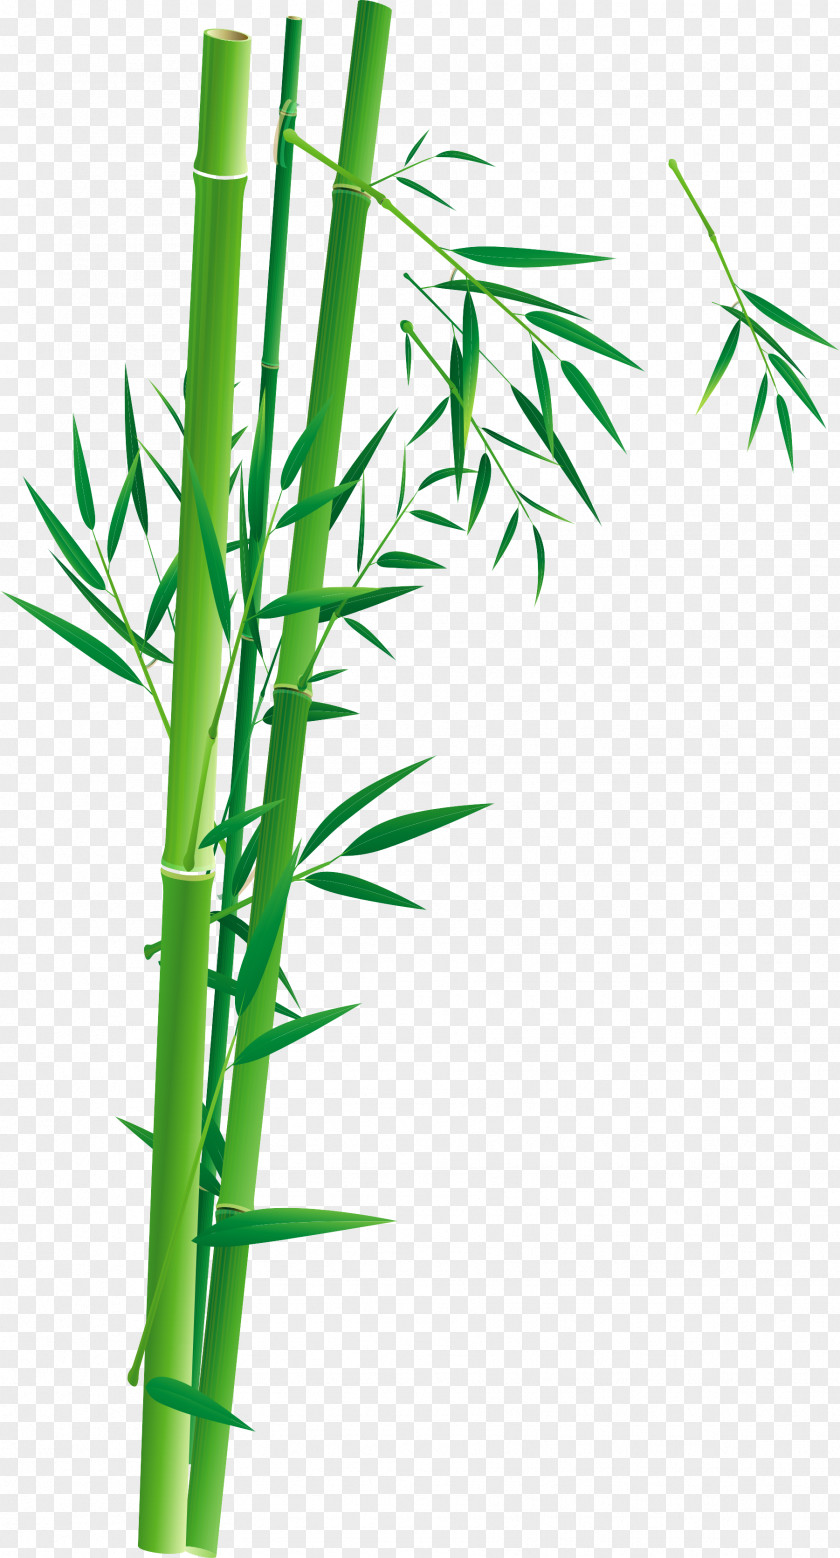 Bamboo Poster Bambusa Oldhamii Illustration PNG